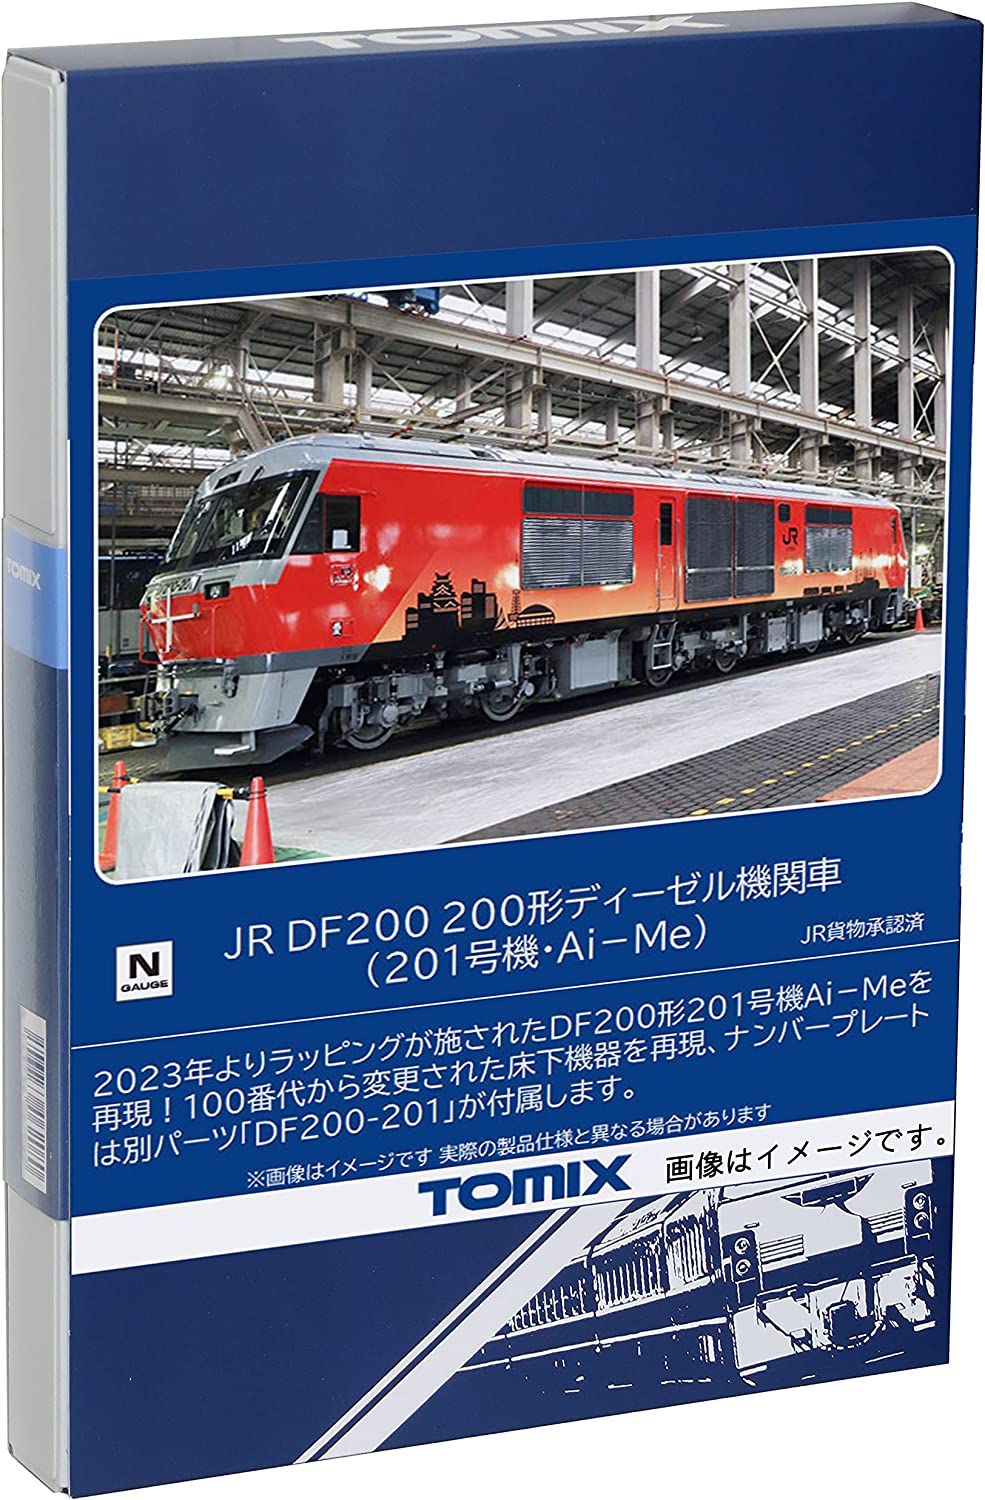 [PO AUG 2023] 2253  J.R. Type DF200-200 Diesel Locomotive (#201,